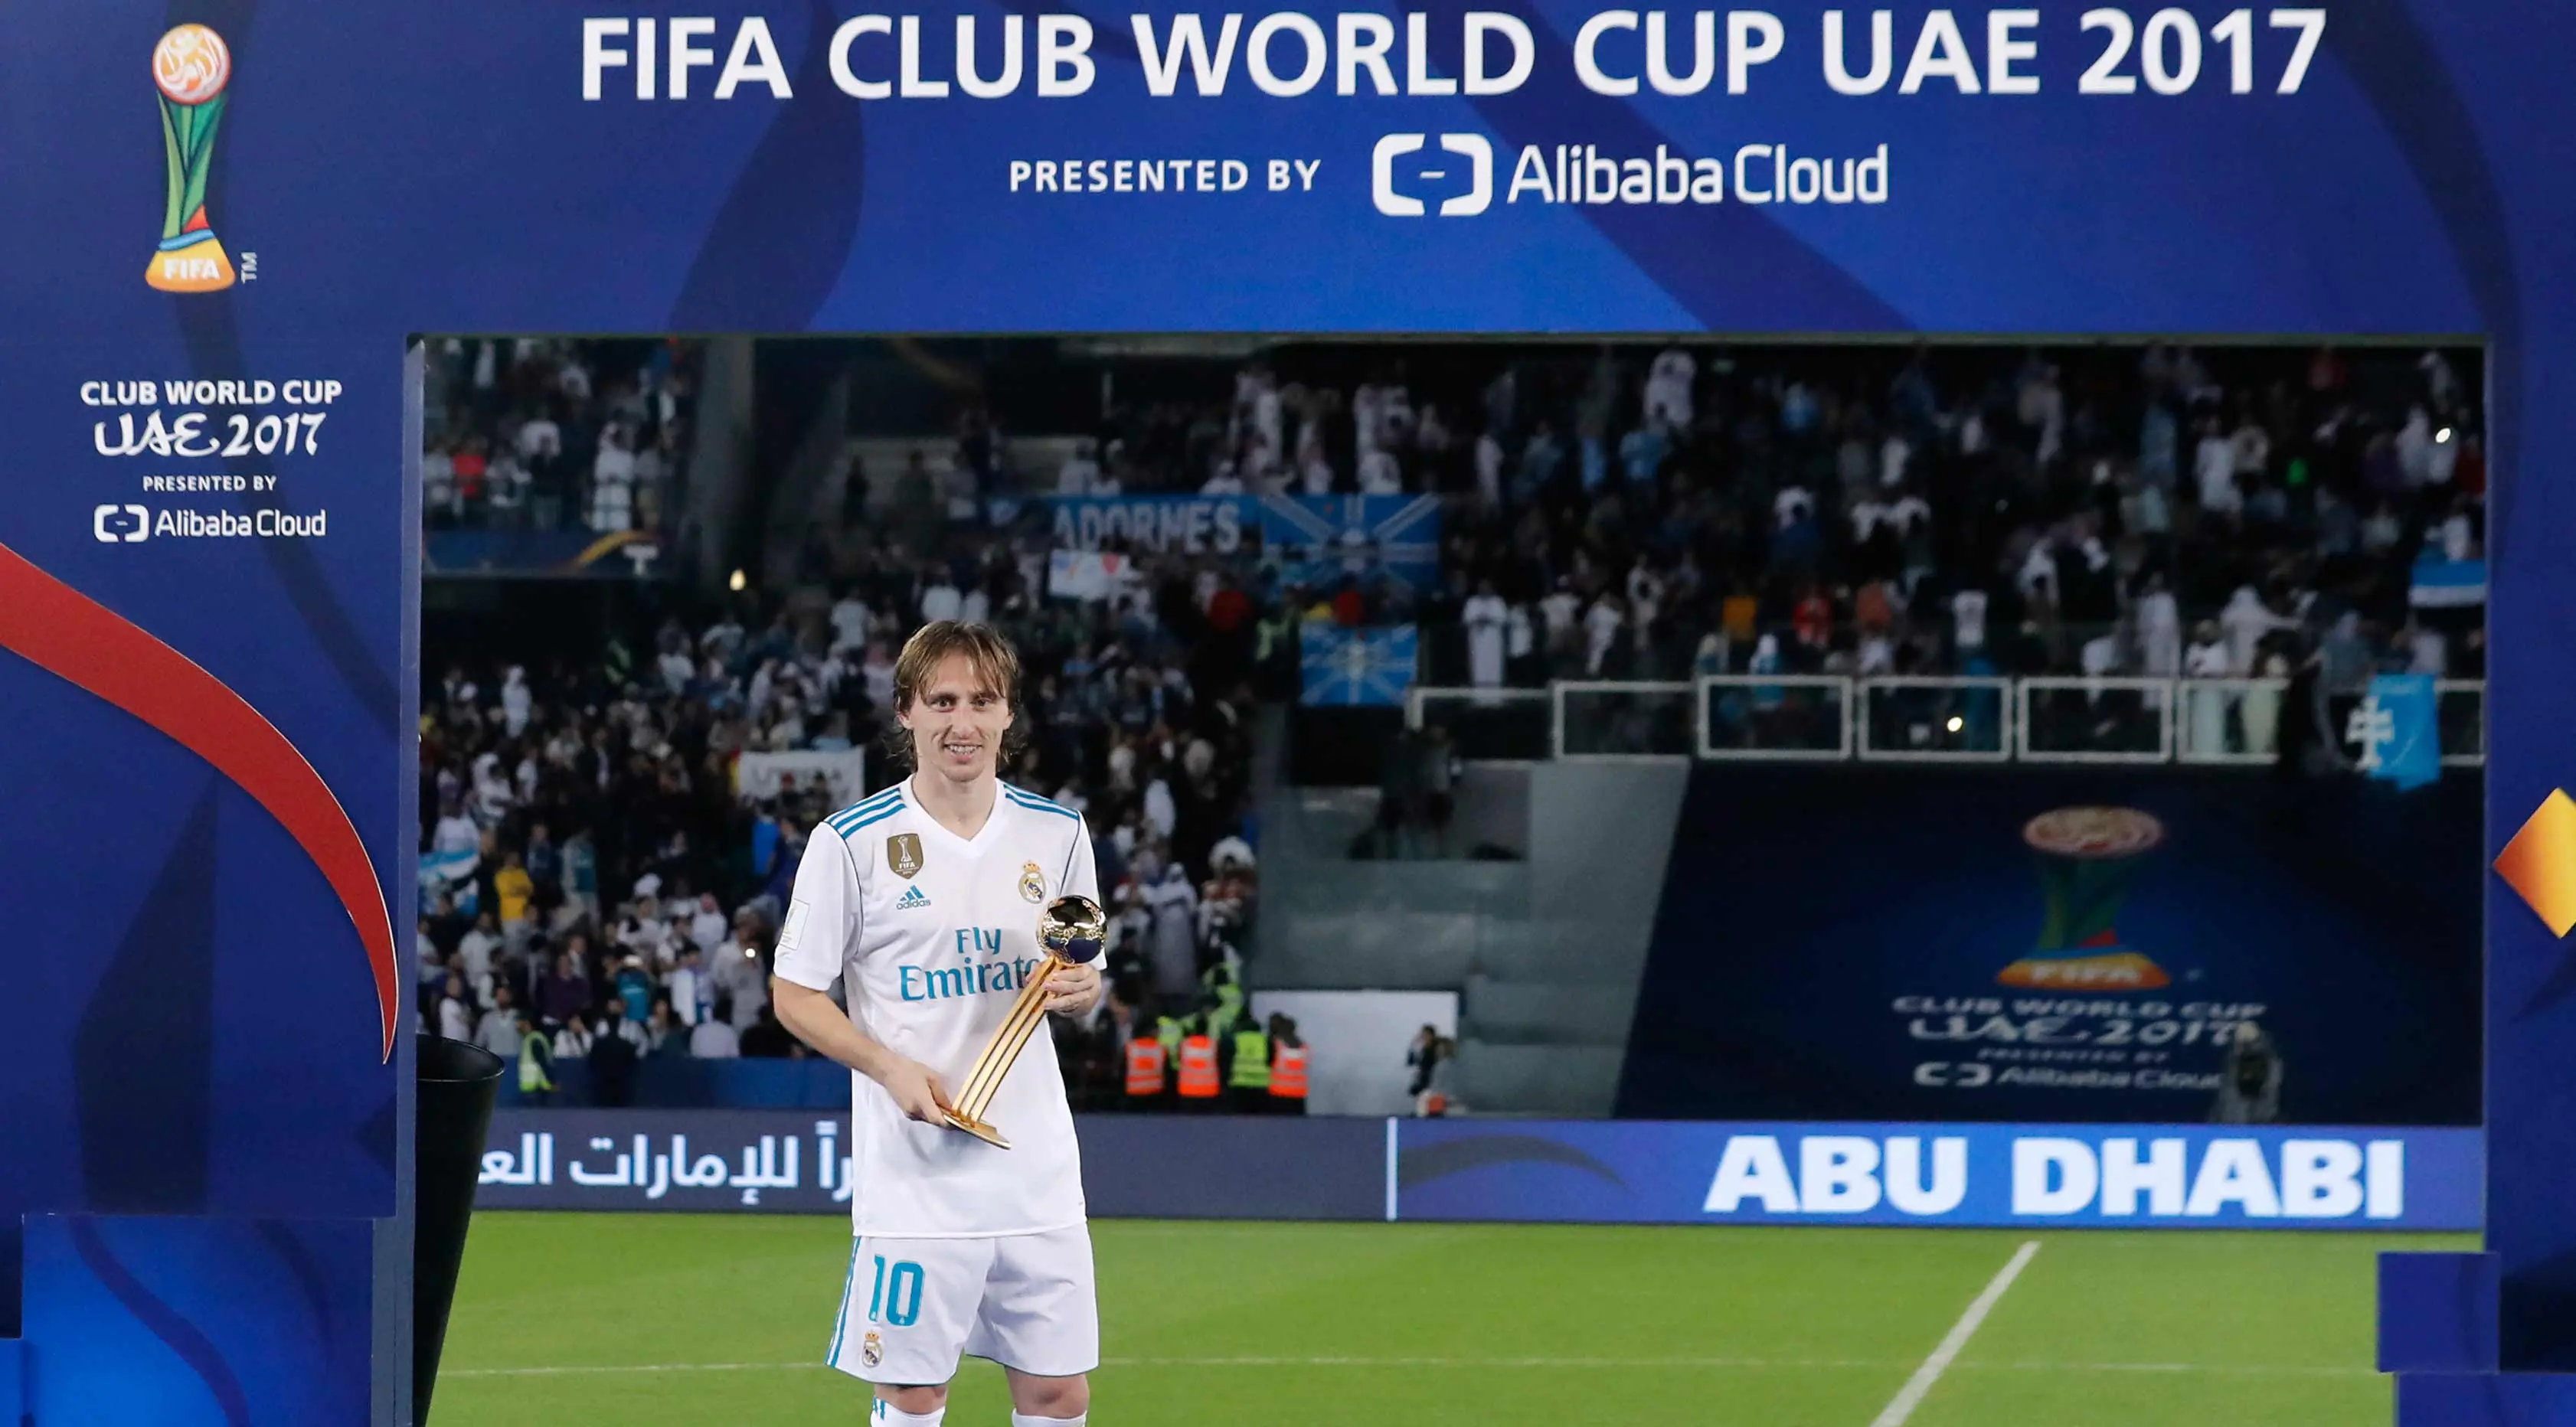 Gelandang Real Madrid, Luka Modric berpose dengan trofi bola emas usai pertandingan melawan Gremio pada Piala Dunia Antarklub 2017 distadion Zayed Sports City, Abu Dhabi, Uni Emirat Arab. Modric menjadi man of the match. (AP Photo/Hassan Ammar)